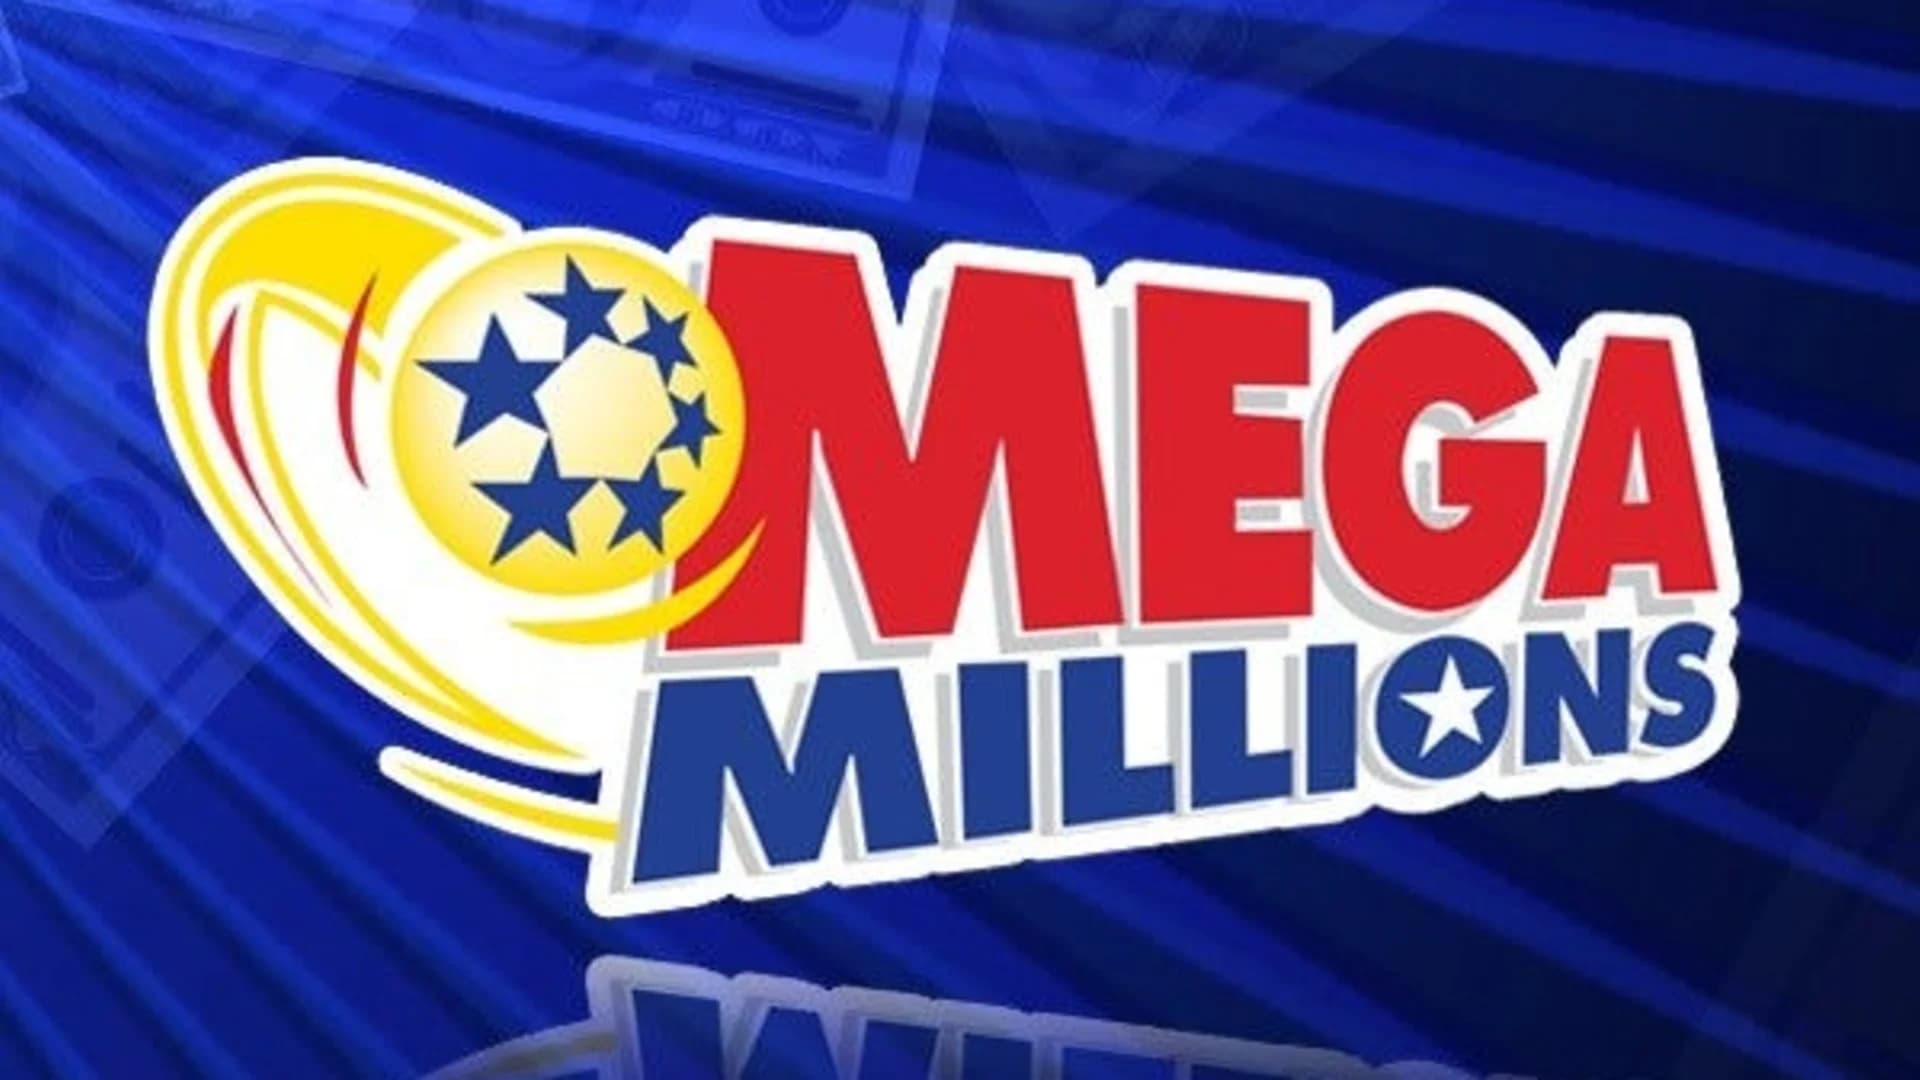 Winning Mega Millions ticket worth $267 million sold in New Jersey